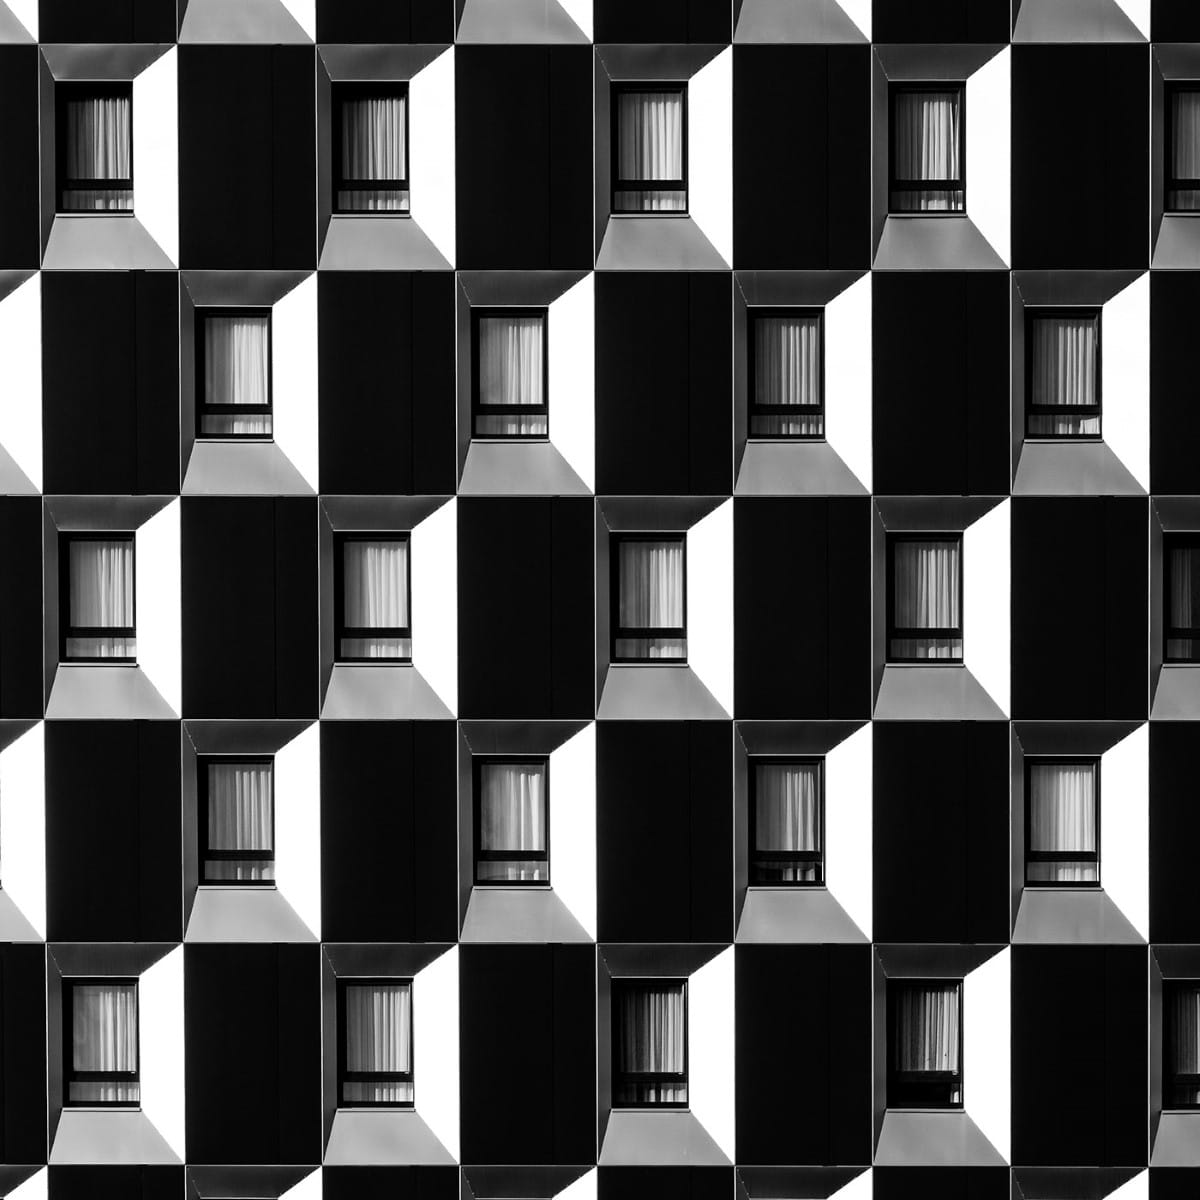 Black and white photo of windows on a skyscraper